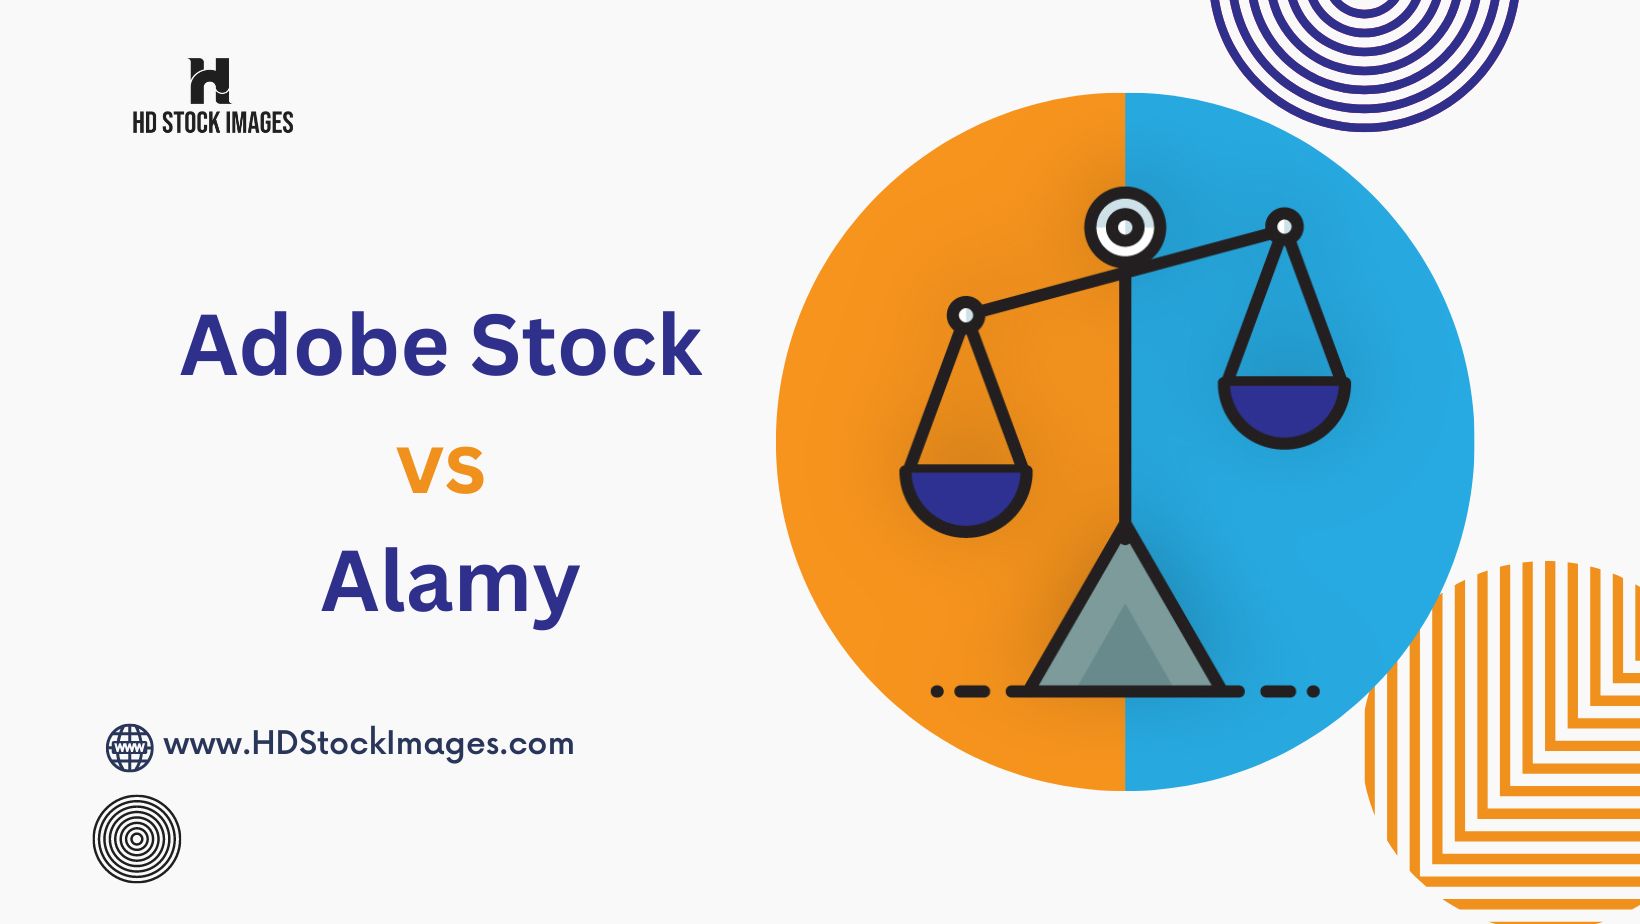 An image of Adobe Stock VS Alamy